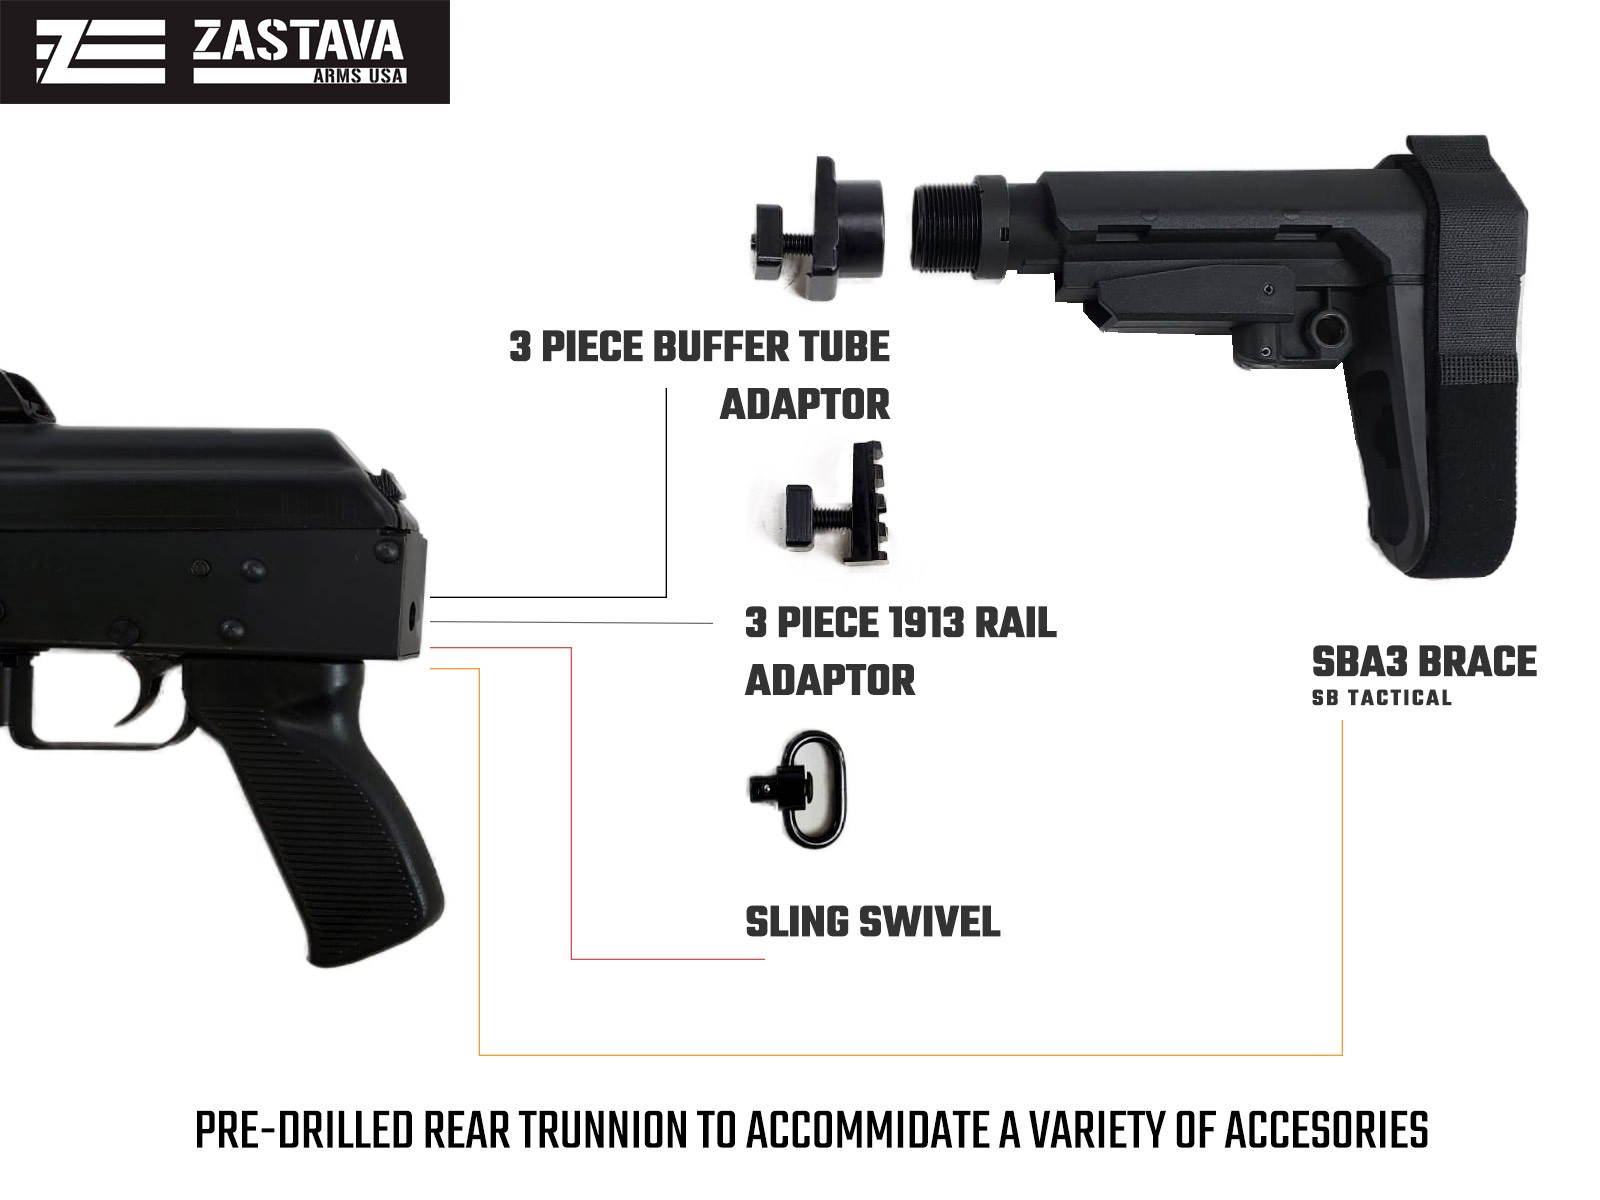 NEW ZPAP92 ak firearm pre-drilled trunnion accessories view